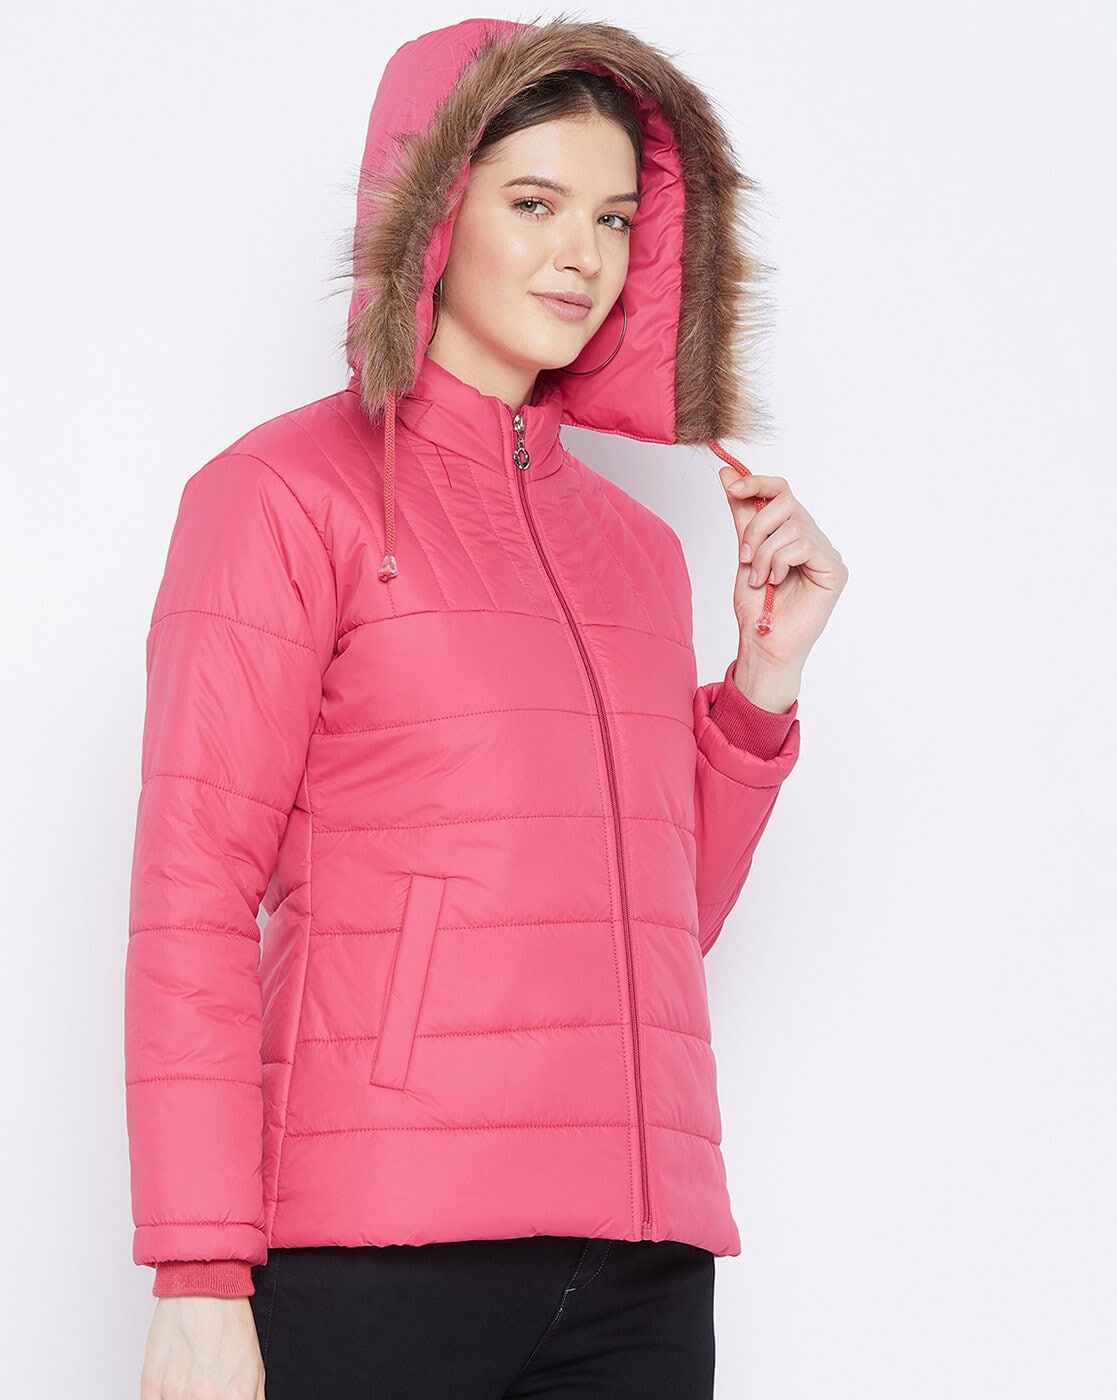 Stand-up collar puffer jacket - Powder pink - Ladies | H&M IN